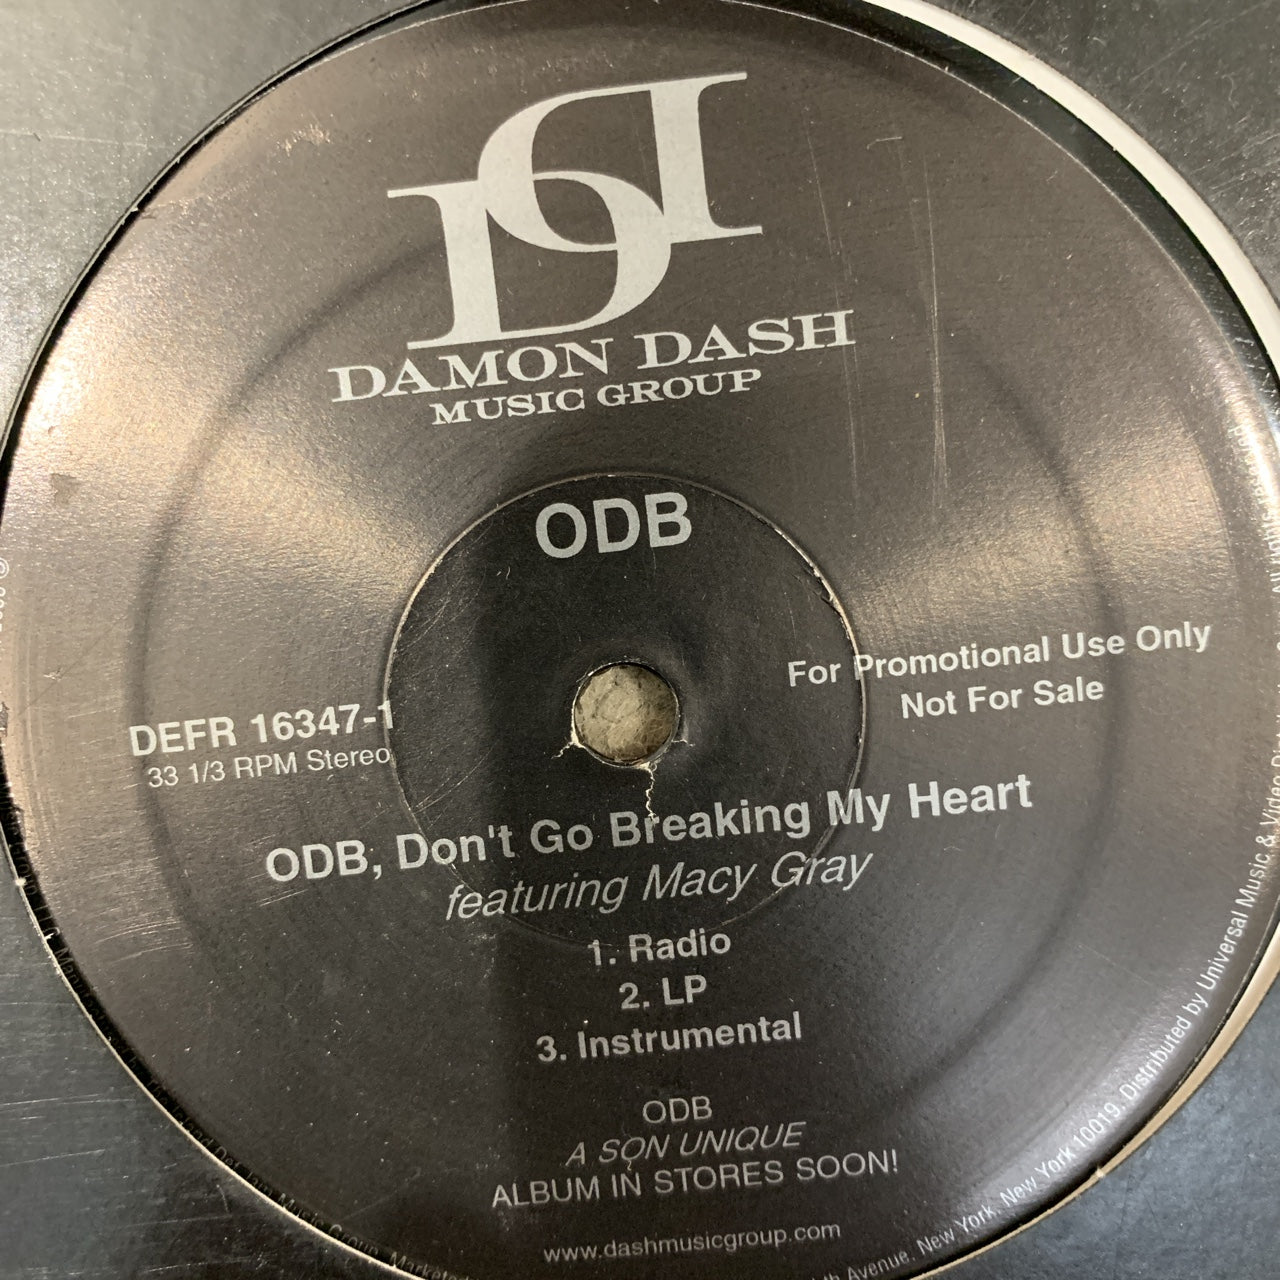 ODB Old Dirty Bastard “ODB, Don’t Go Breaking My Heart”